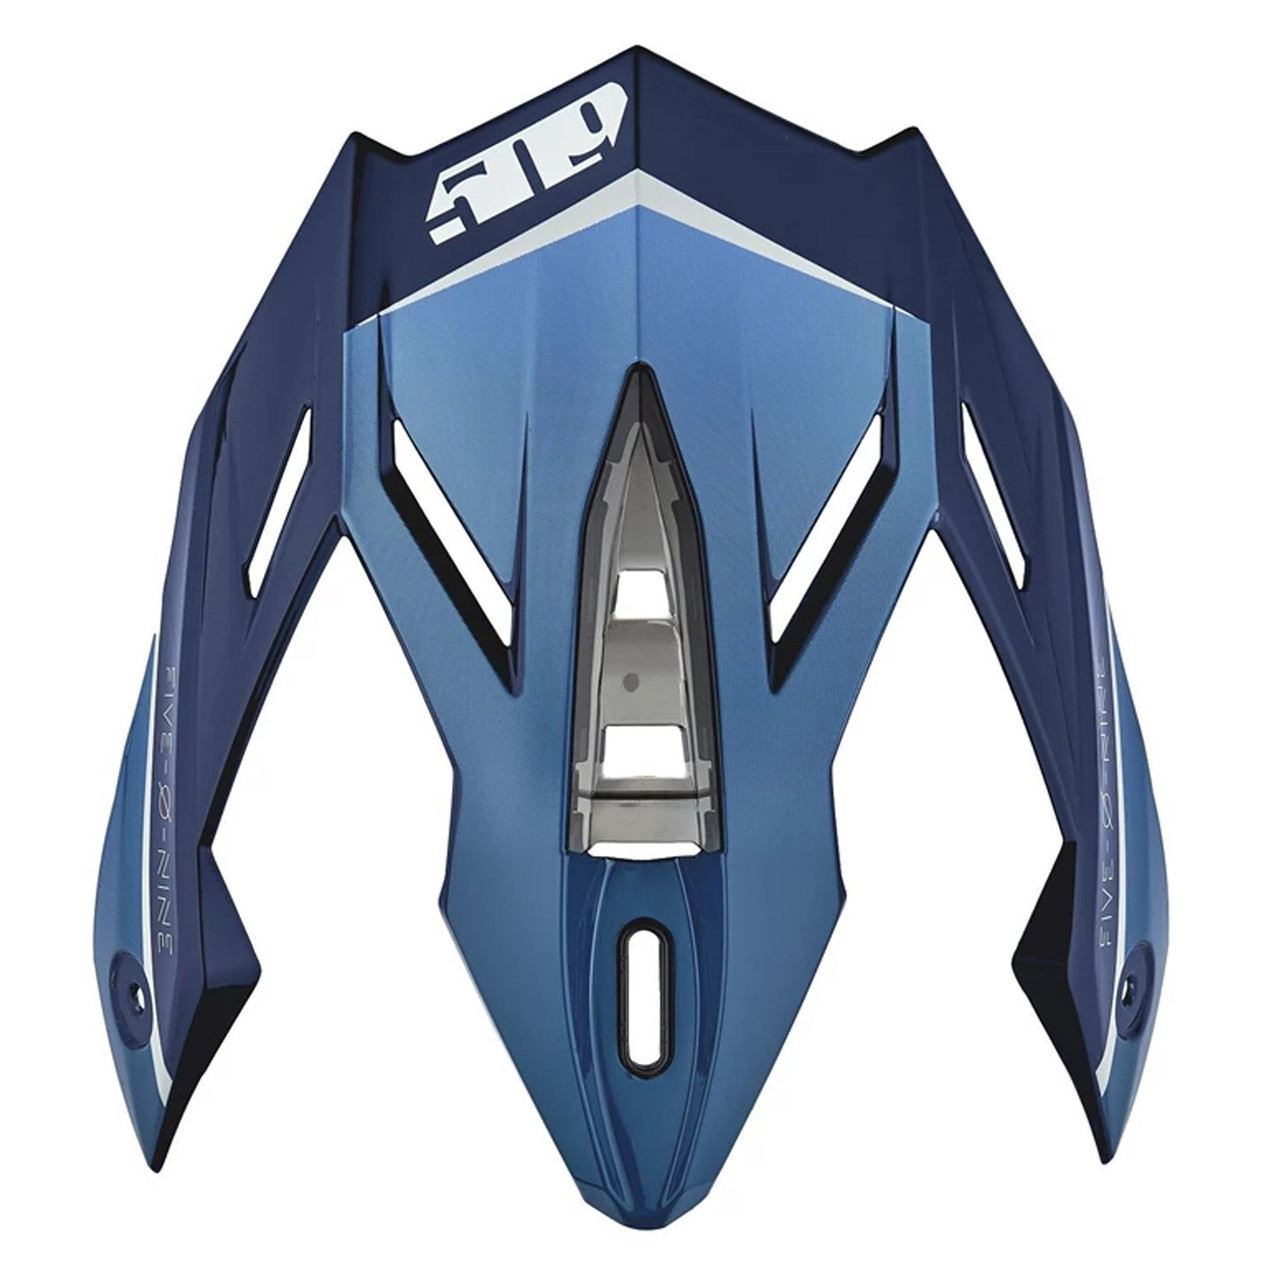 Polaris Snowmobile New OEM, 509 Replacement Visor, Delta R3 Adult Helmet,2860732